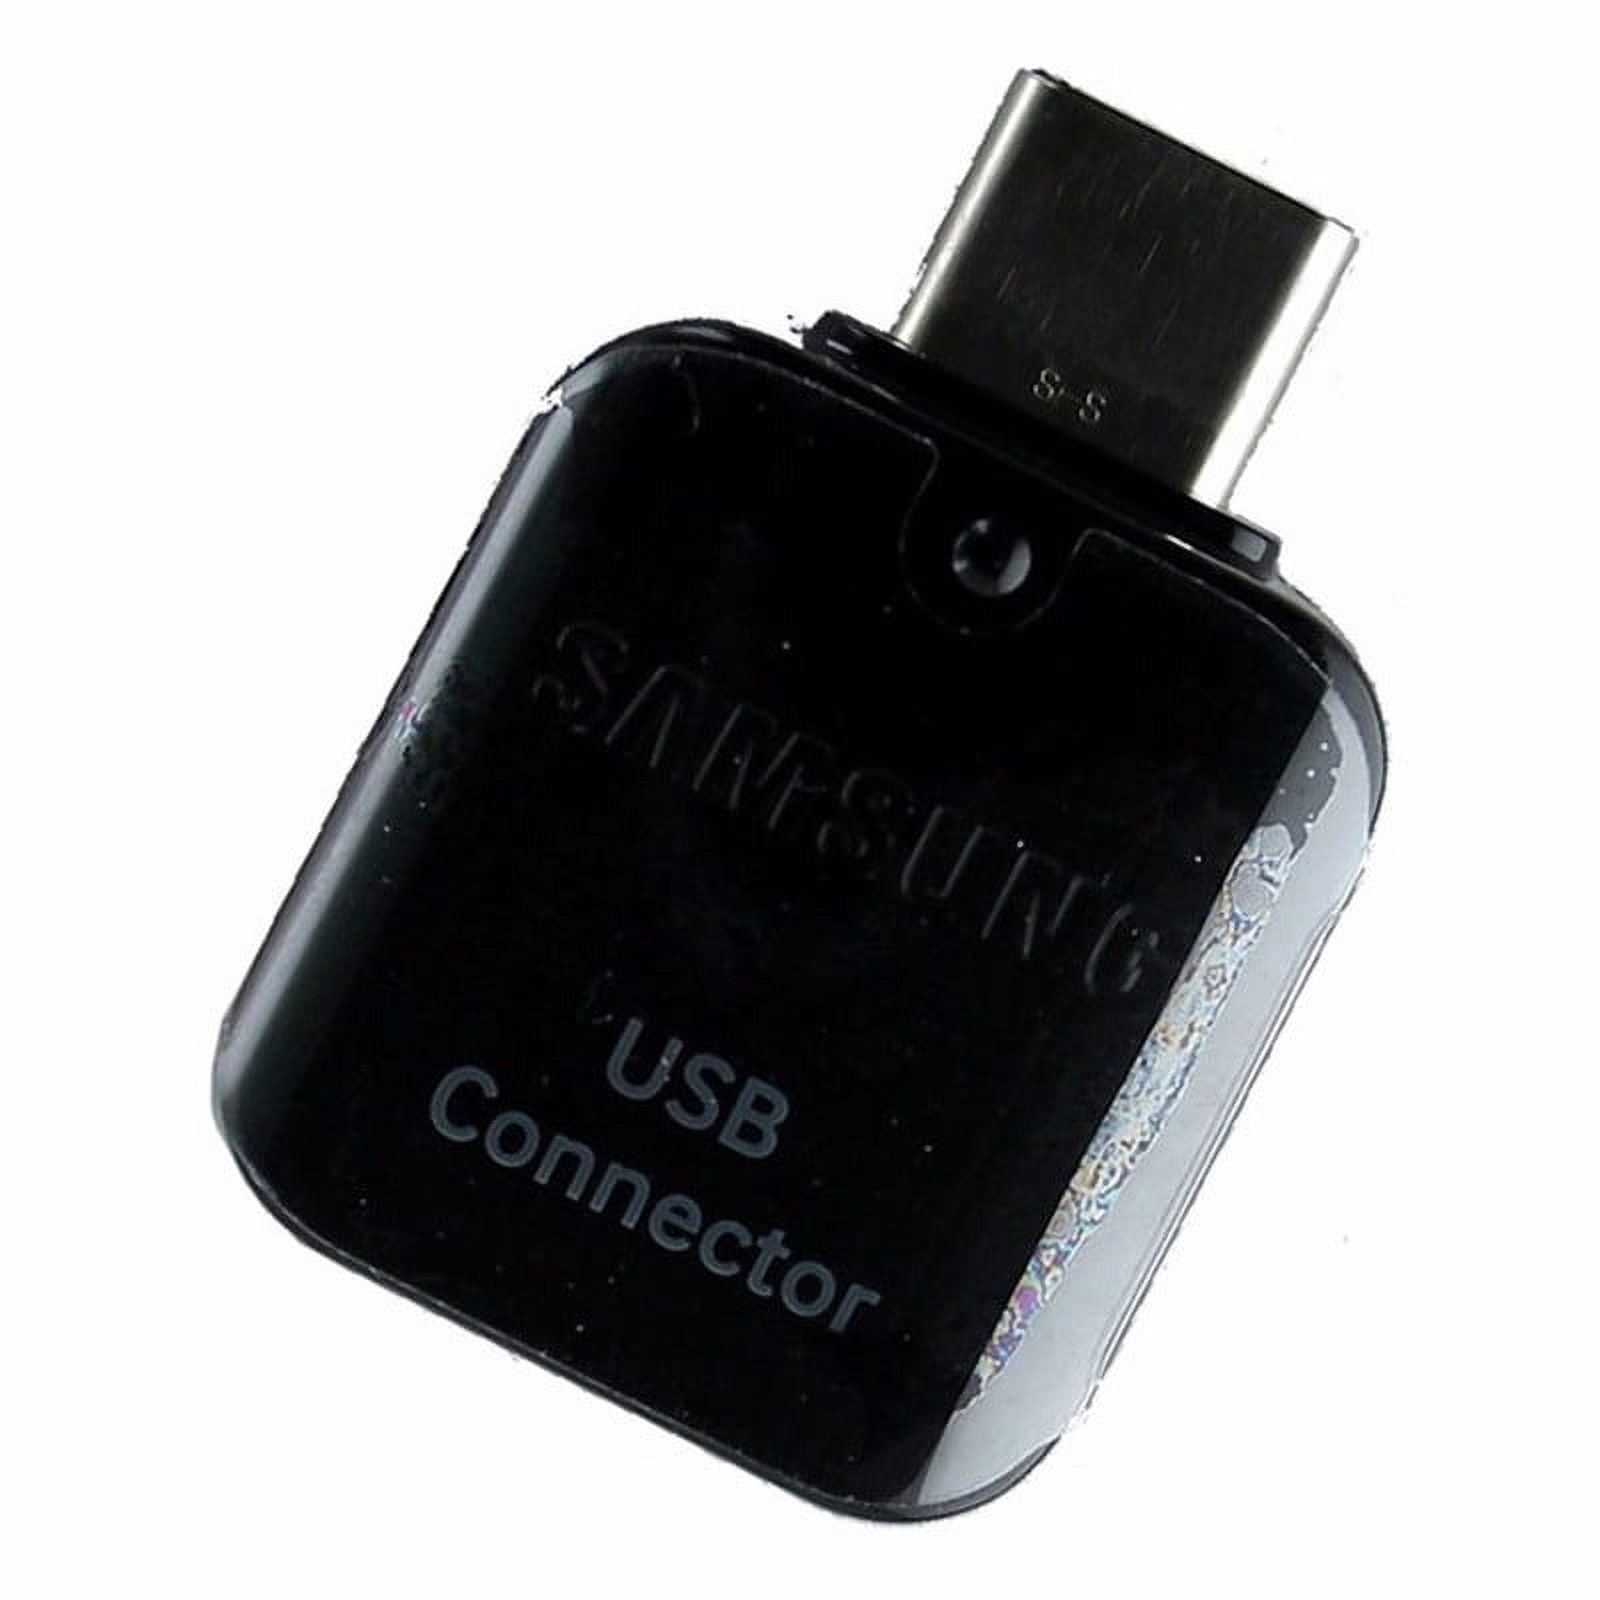 Adaptateur OTG USB vers USB-C d'origine Samsung noir